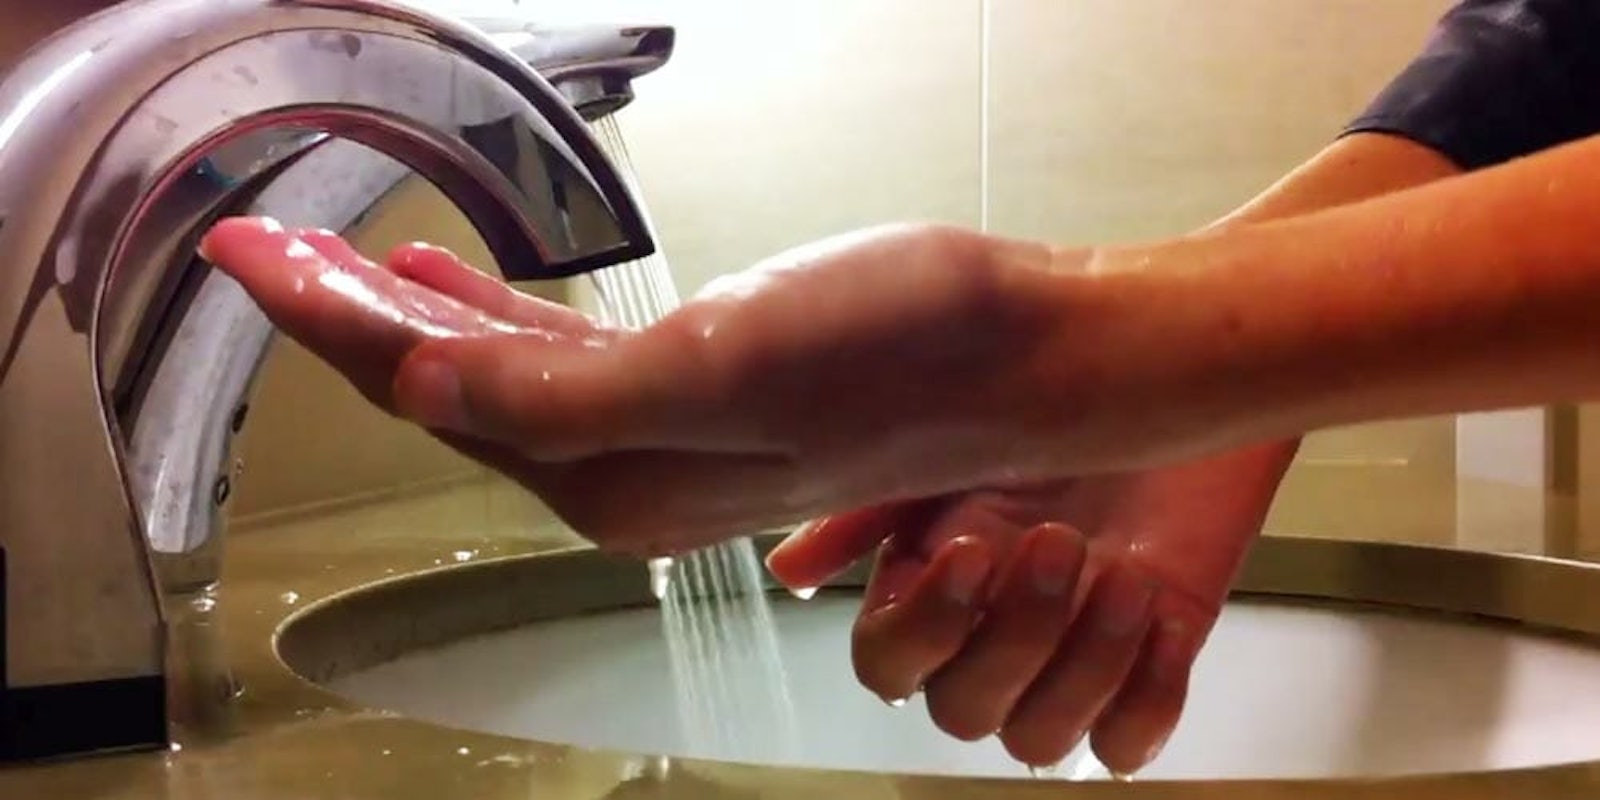 washing hands debate